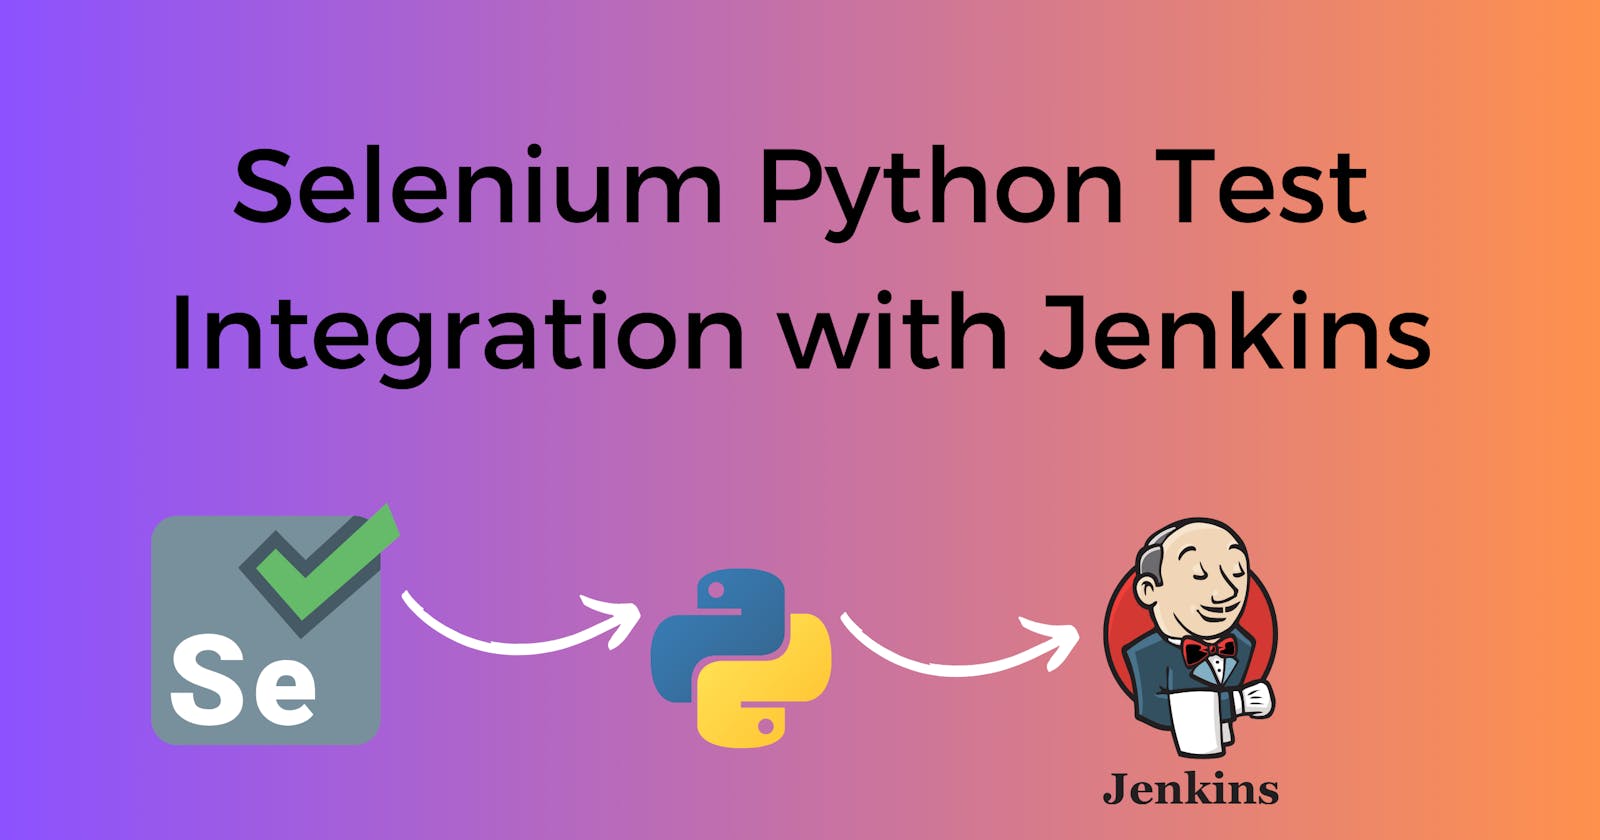 Selenium Python Test Integration with Jenkins